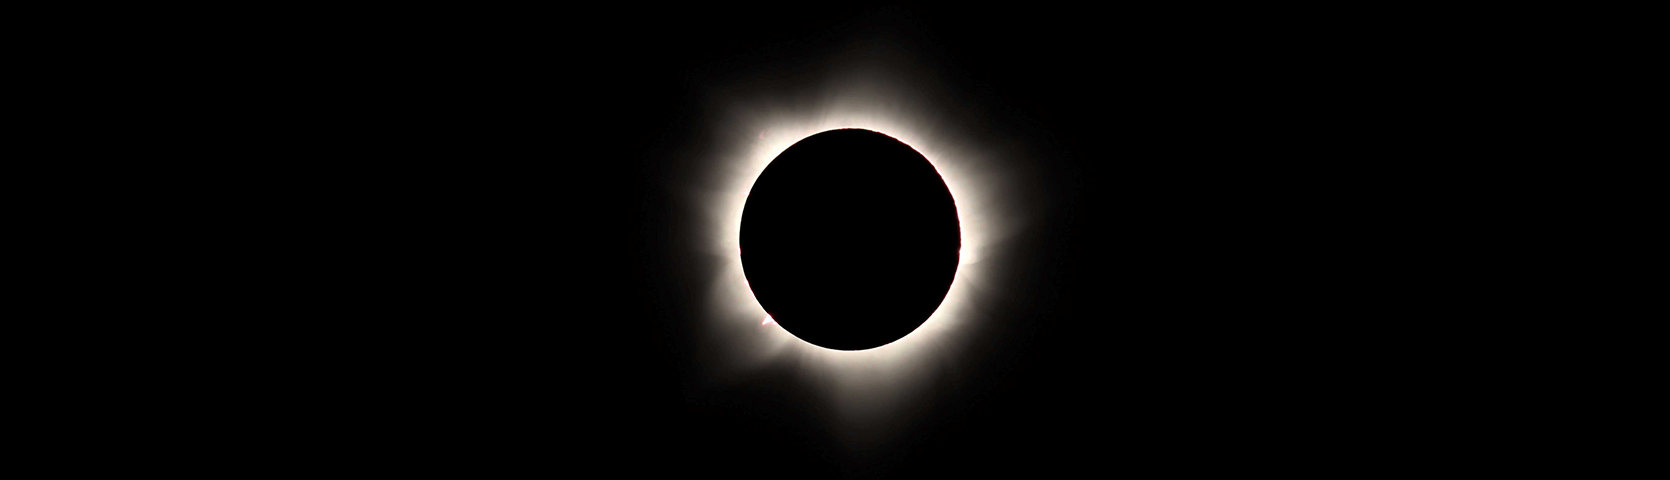 Solar Eclipse image by Luke Logens banner png